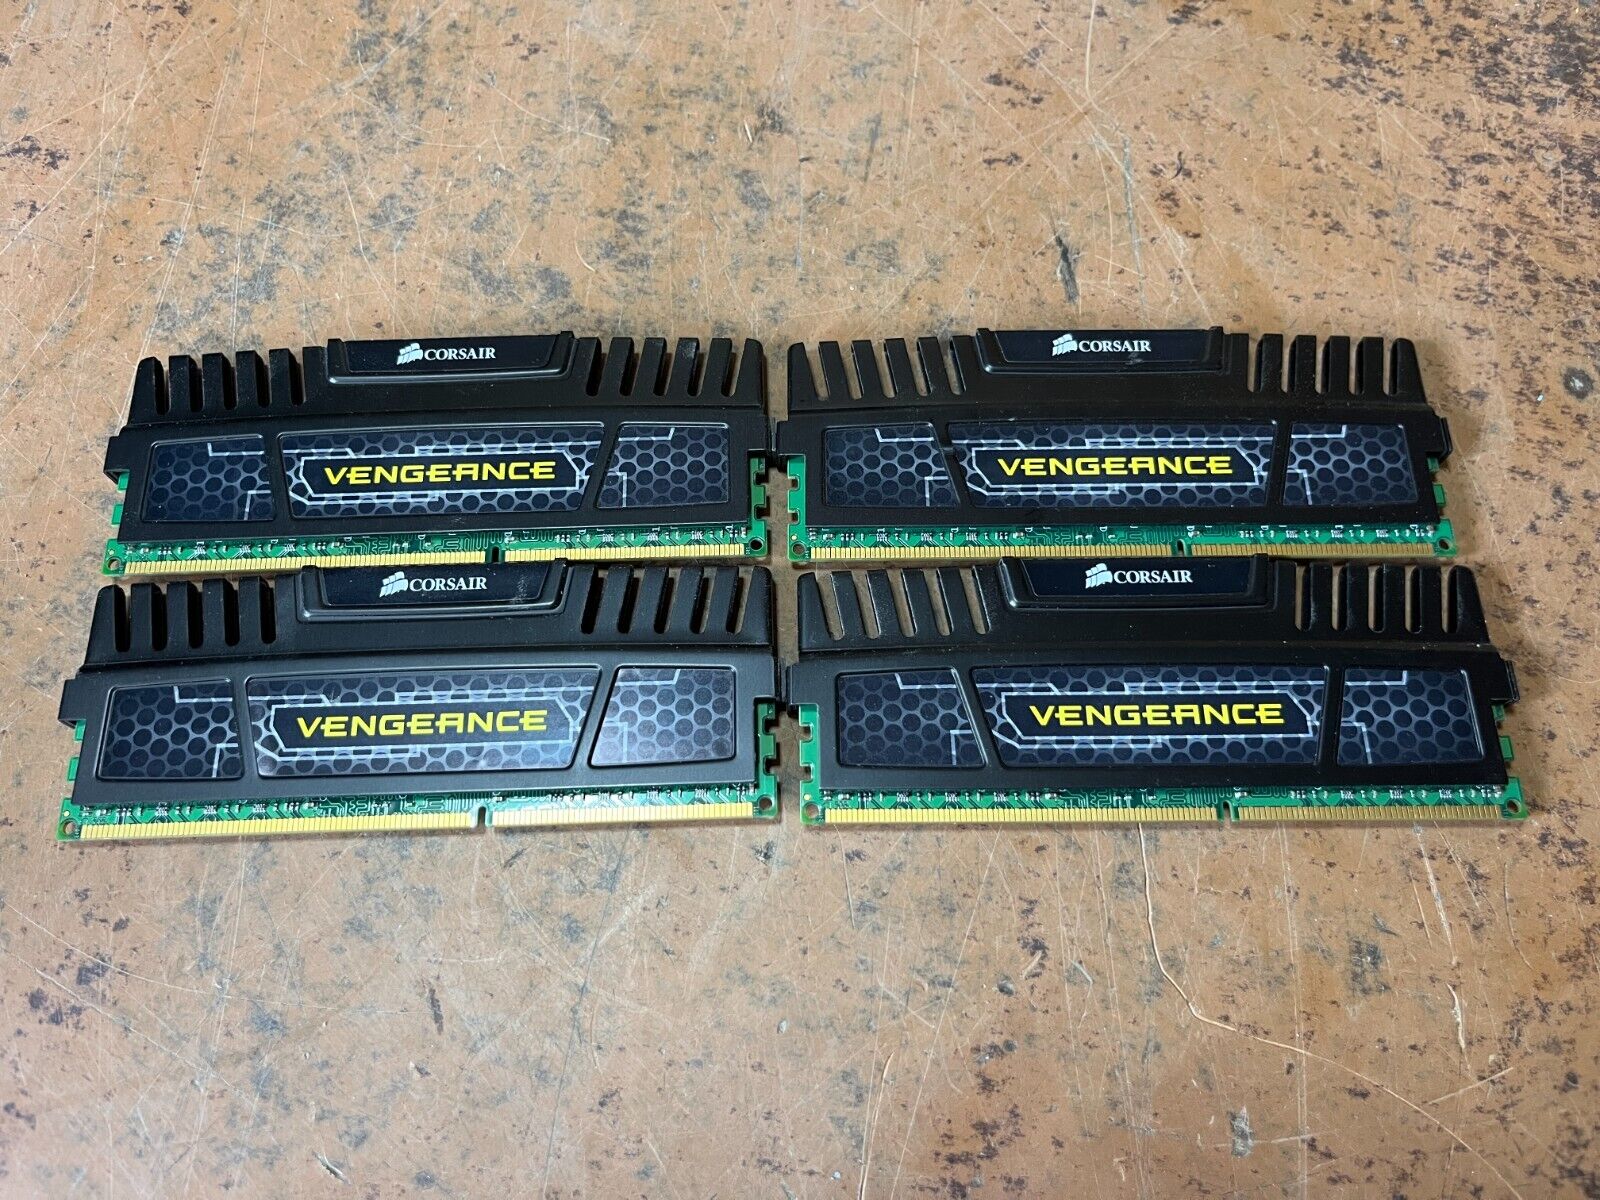 Corsair Vengeance 32GB(4x8GB) DDR3 1600MHz Desktop Memory Kit CMZ32GX3M4X1600C10